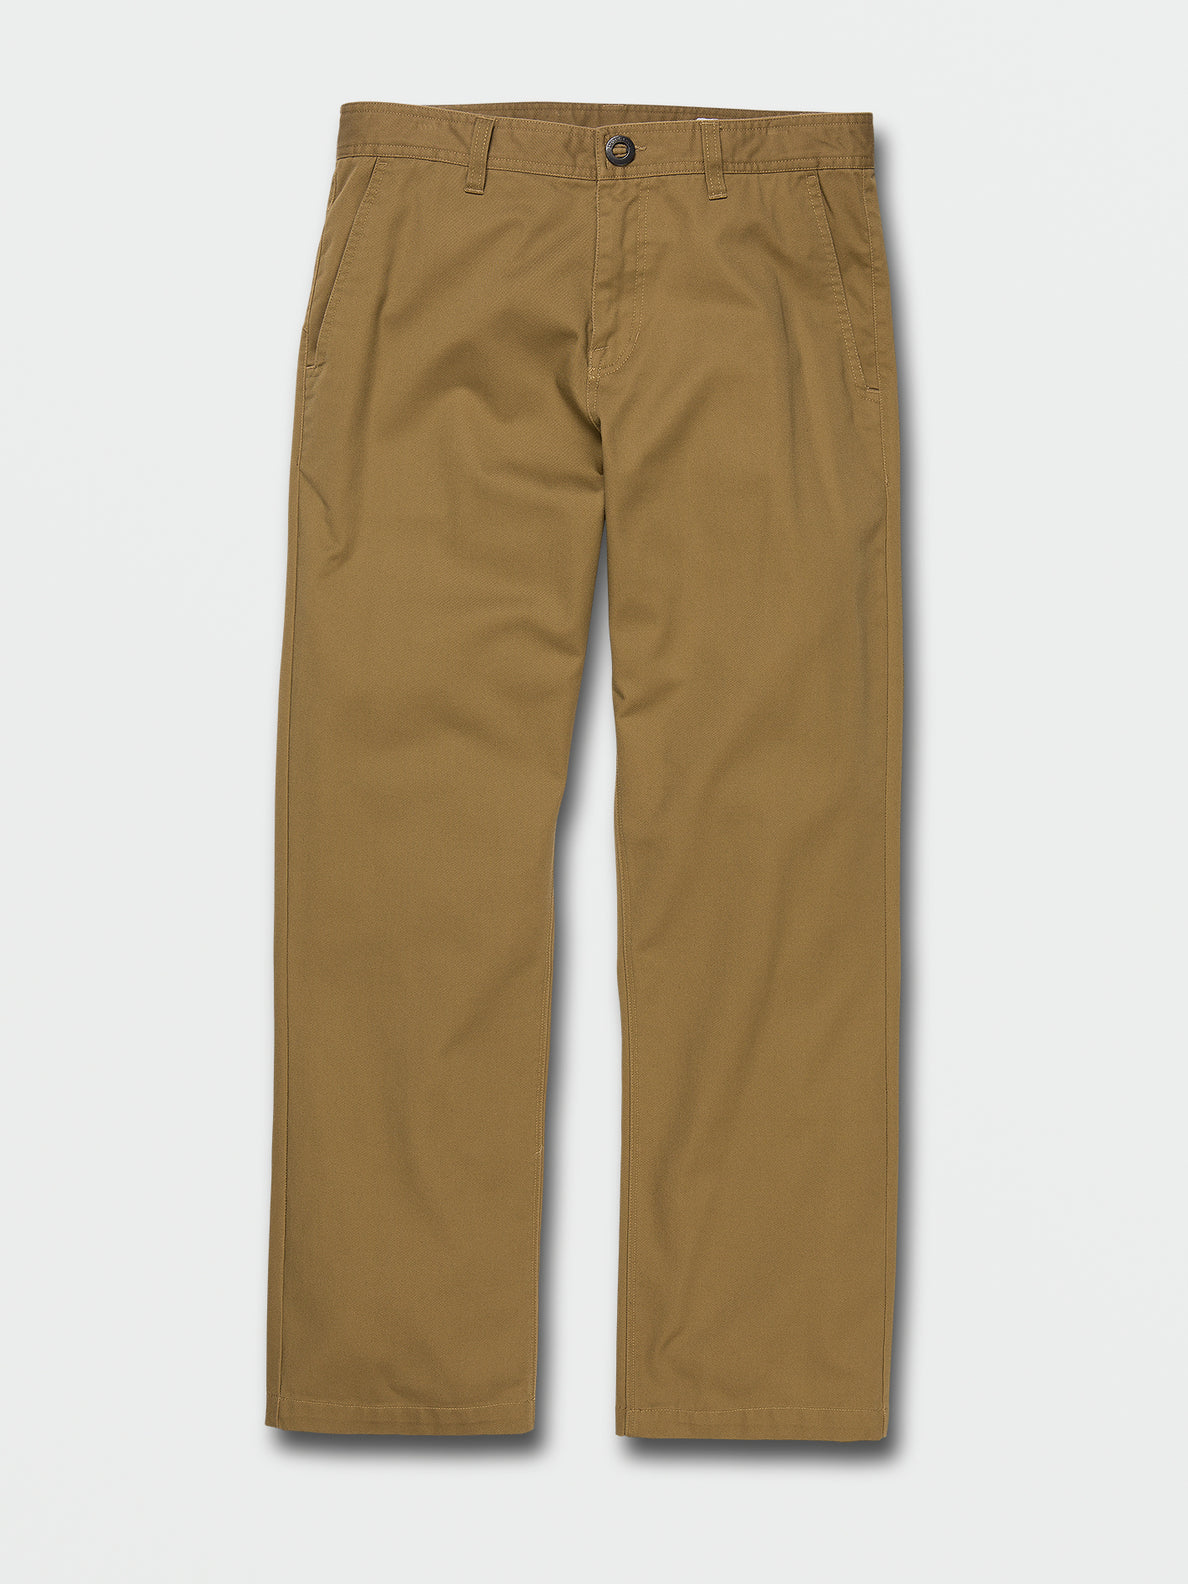 Men's Tall Light Khaki Pants: Traveler Chino Pants | American Tall